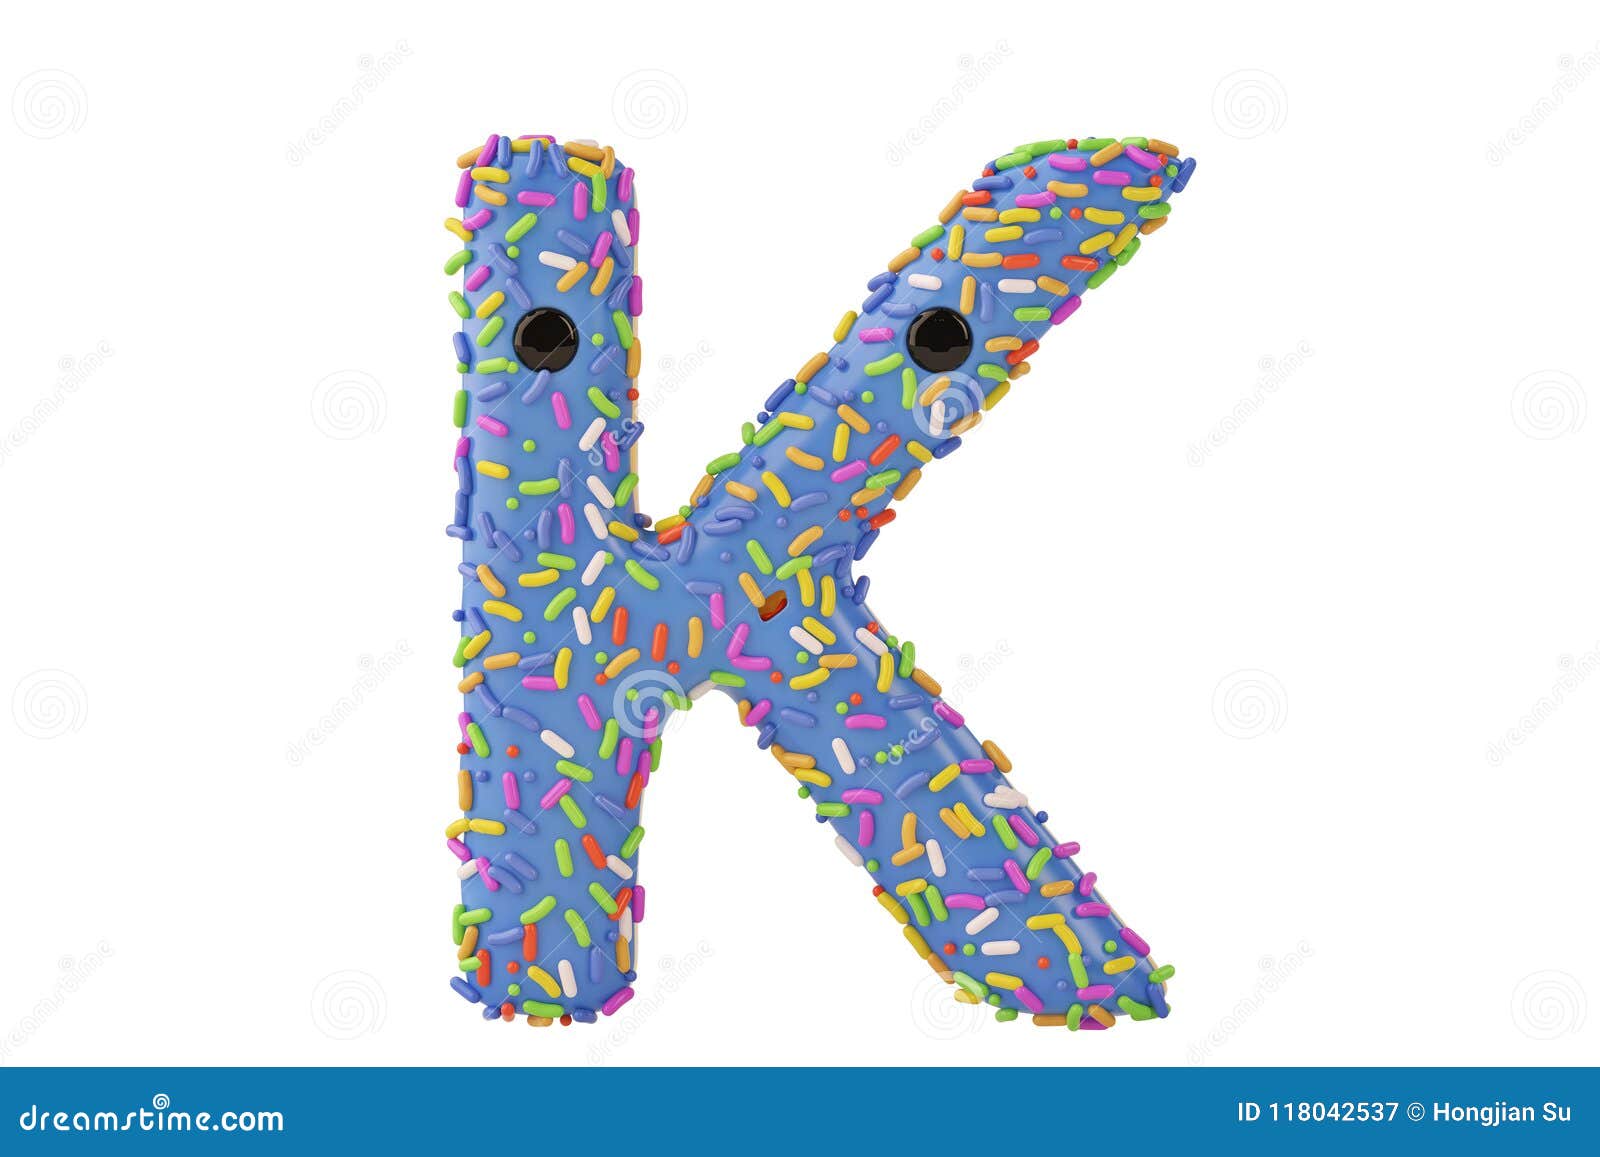 A Cartoon Donut Alphabet Letter K On White Background,3D Illustration ...